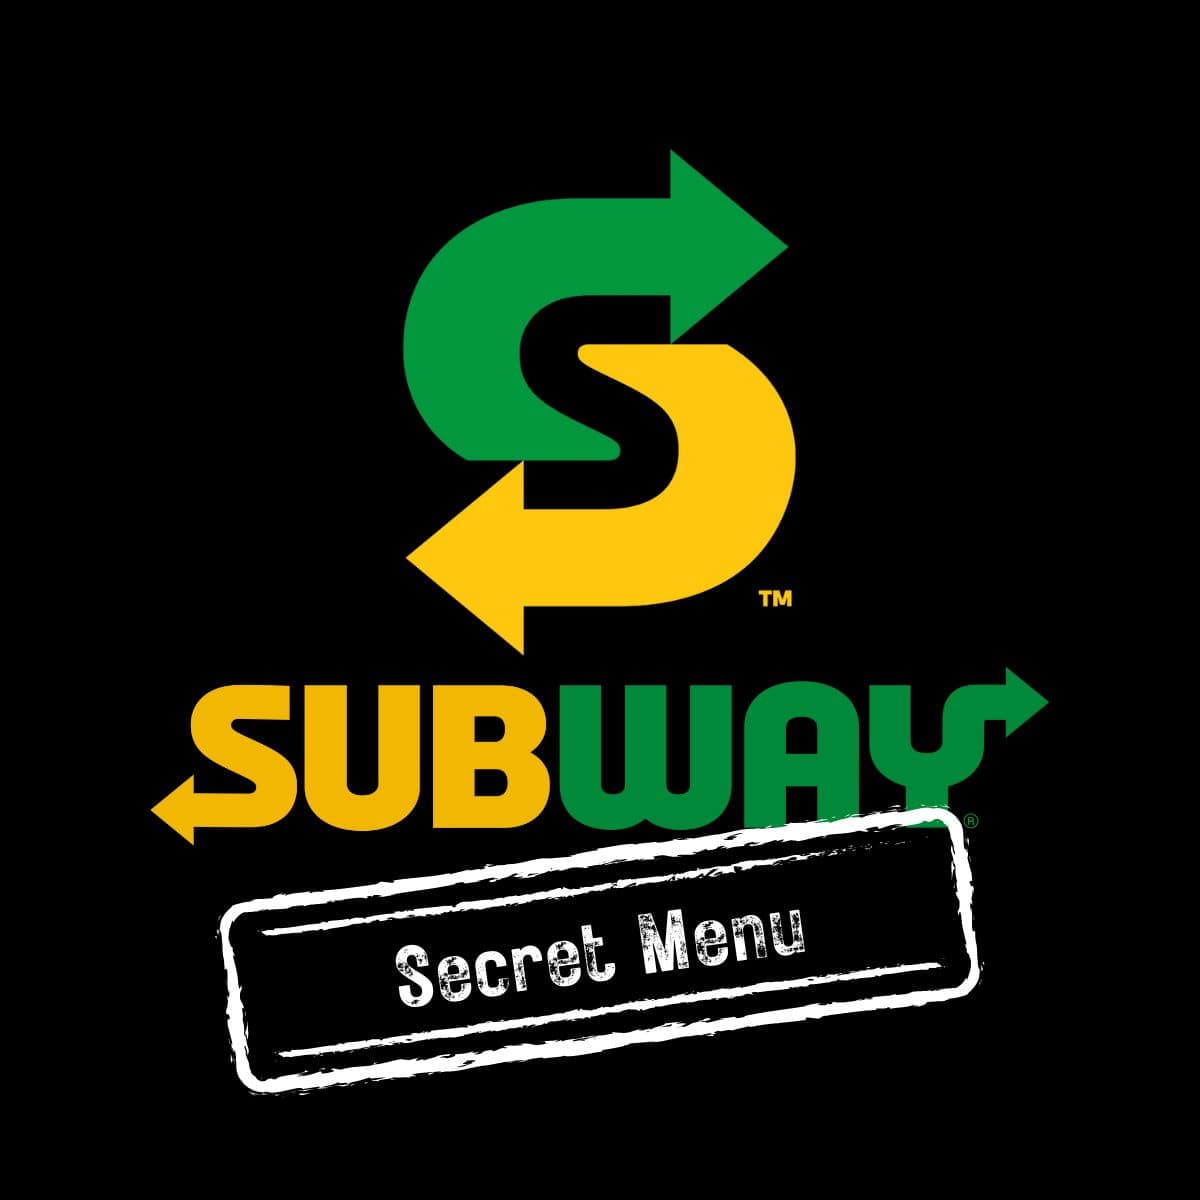 Subway Secret Menu